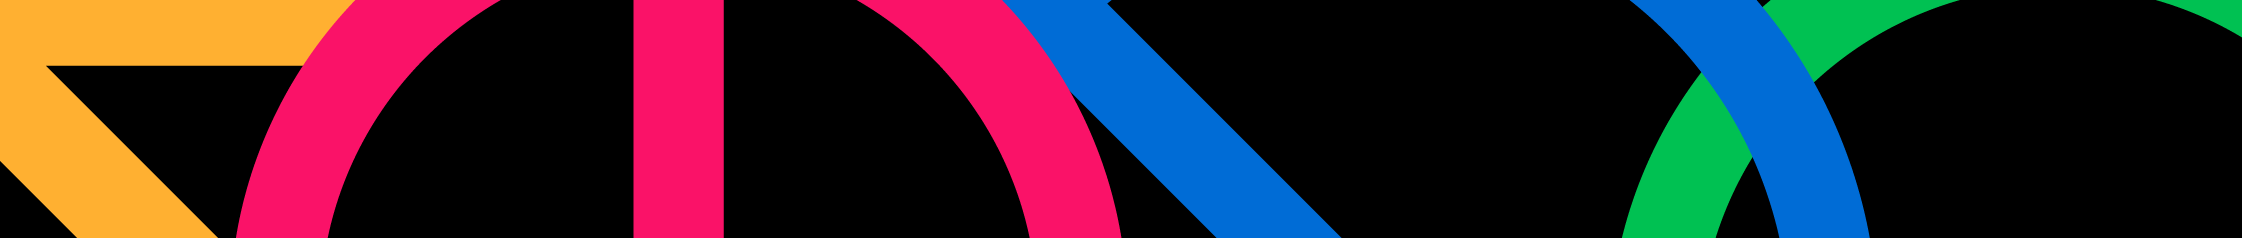 Távola Design's profile banner